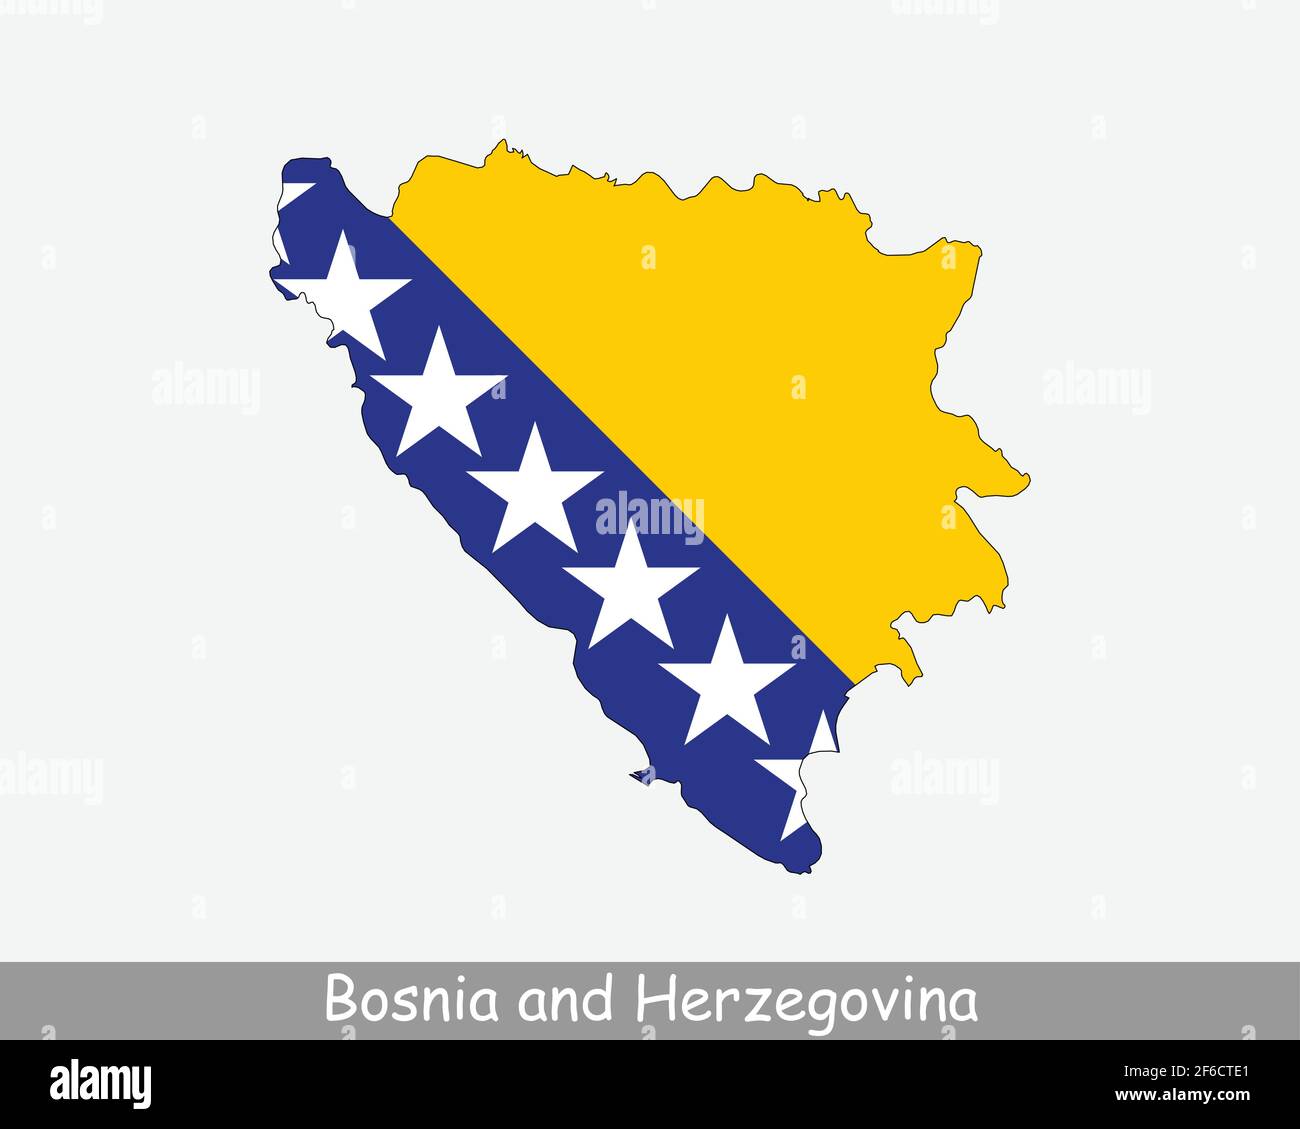 Bosnia and Herzegovina Map Flag. Map of Bosnia and Herzegovina with national flag isolated on white background. Vector Illustration. Stock Vector